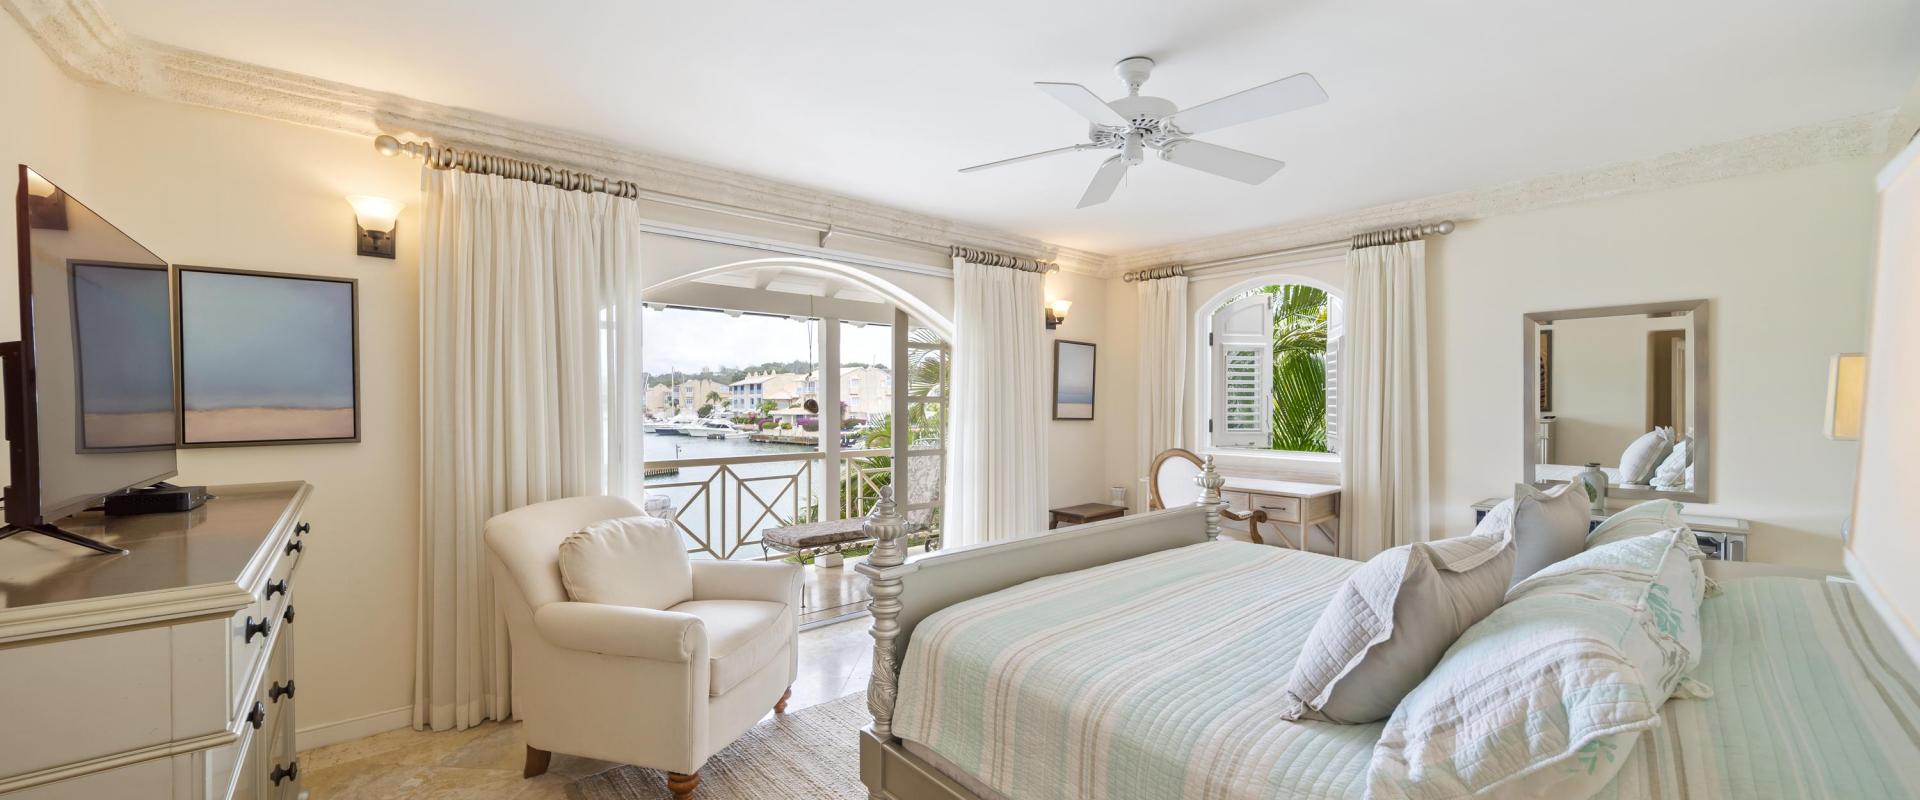 Rental Condo 266 Port St. Charles Barbados Master Bedroom 1